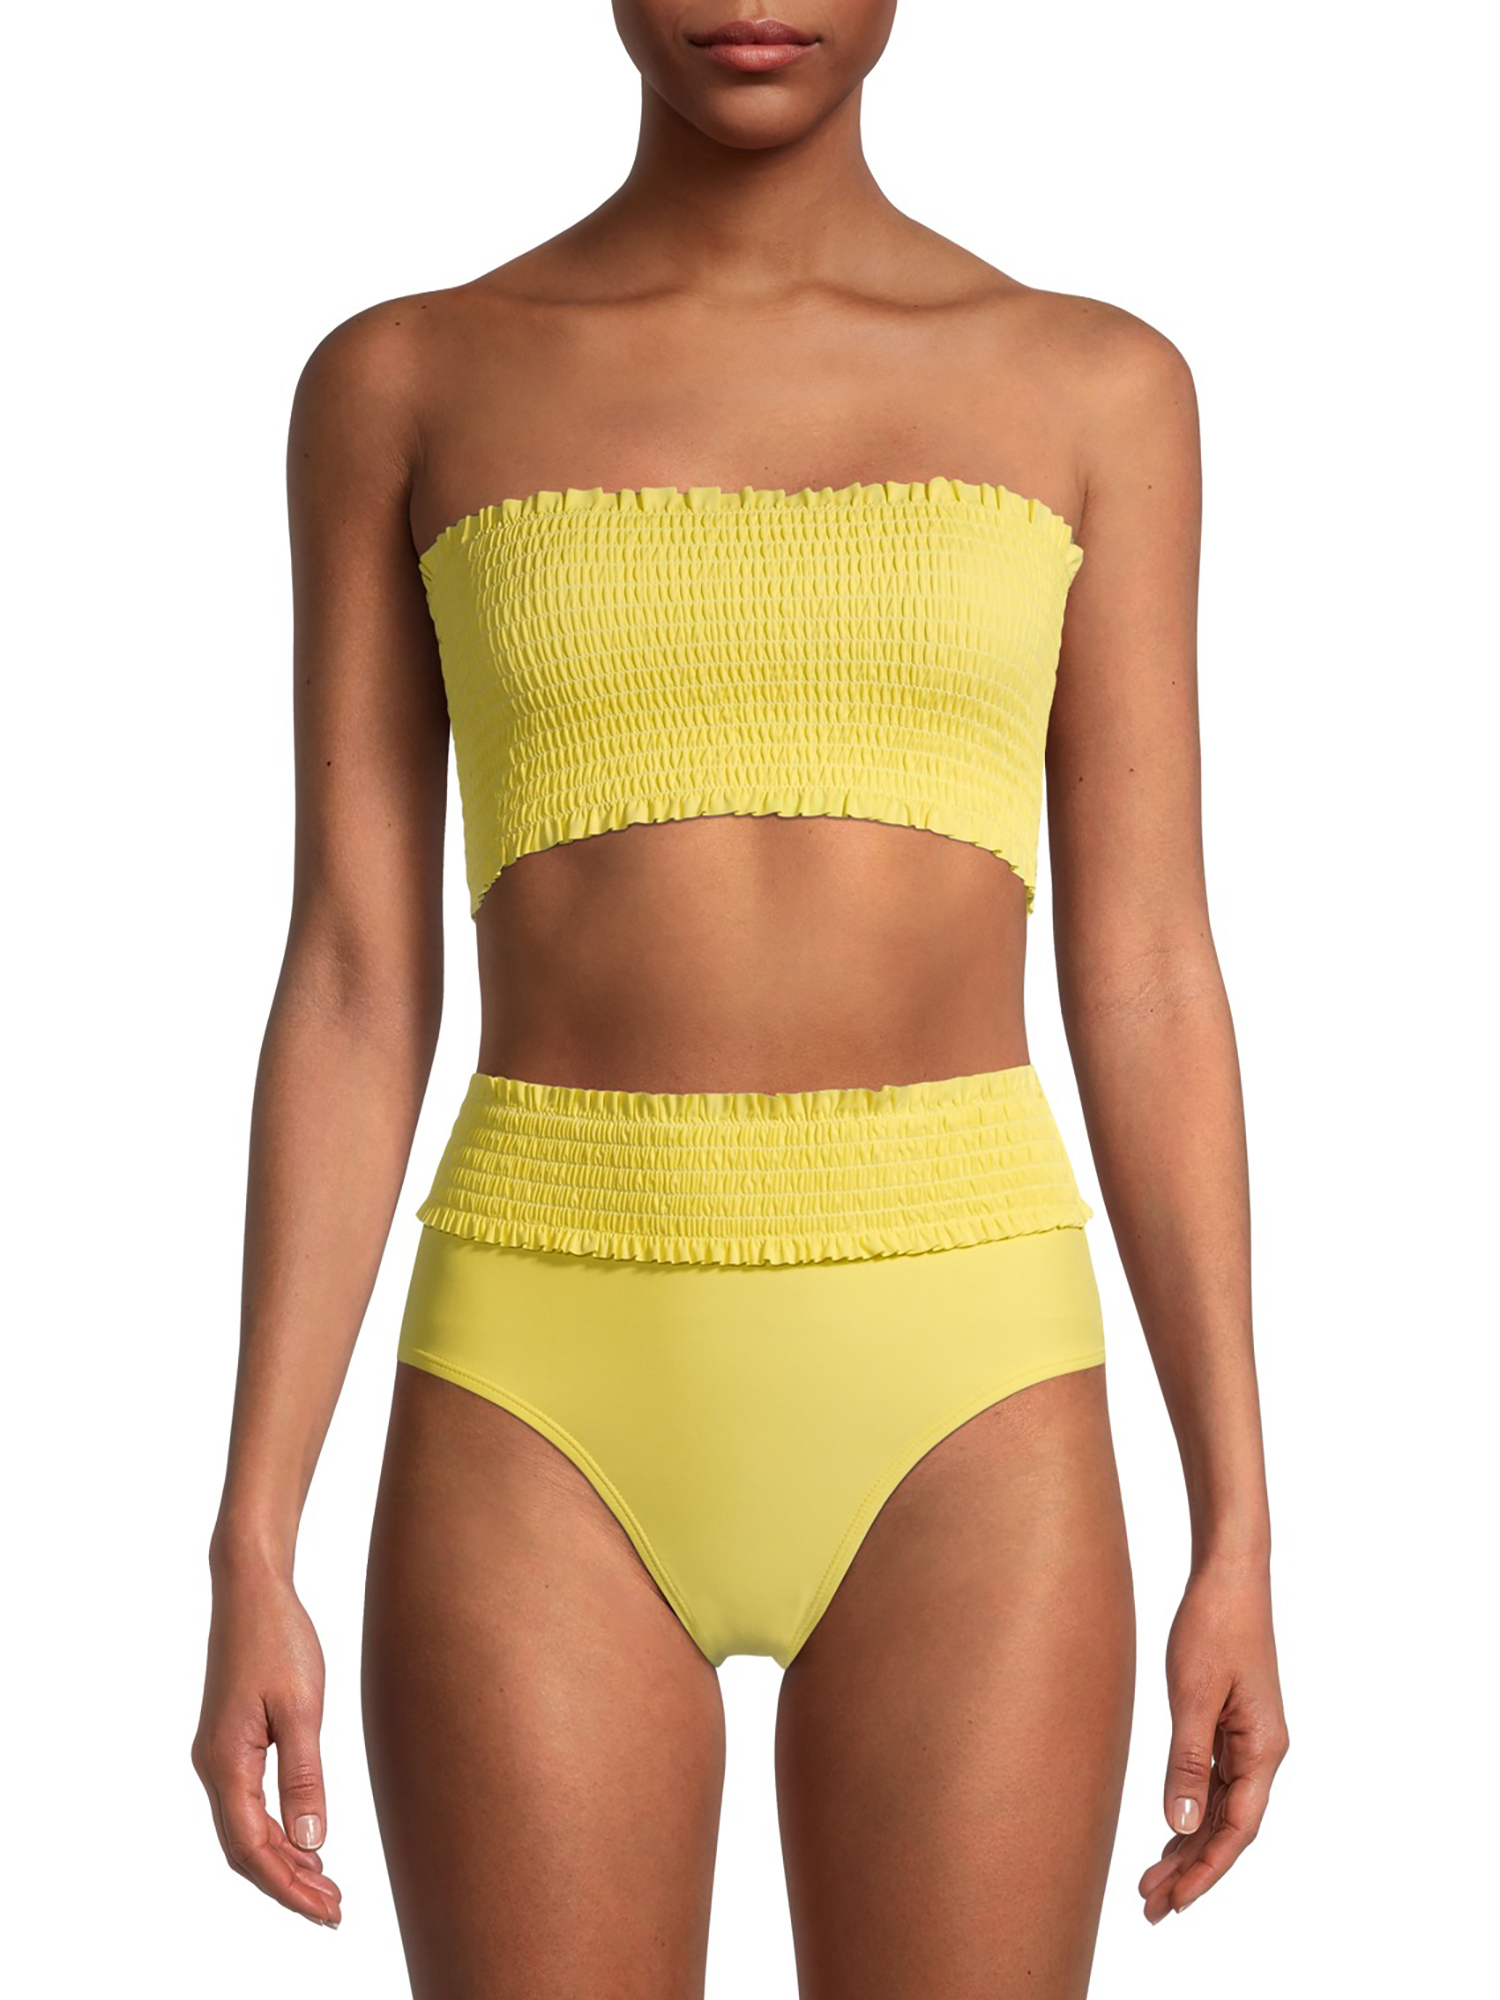 XOXO Women's Shirred Strapless Bandeau Bikini Swimsuit Top - image 1 of 6